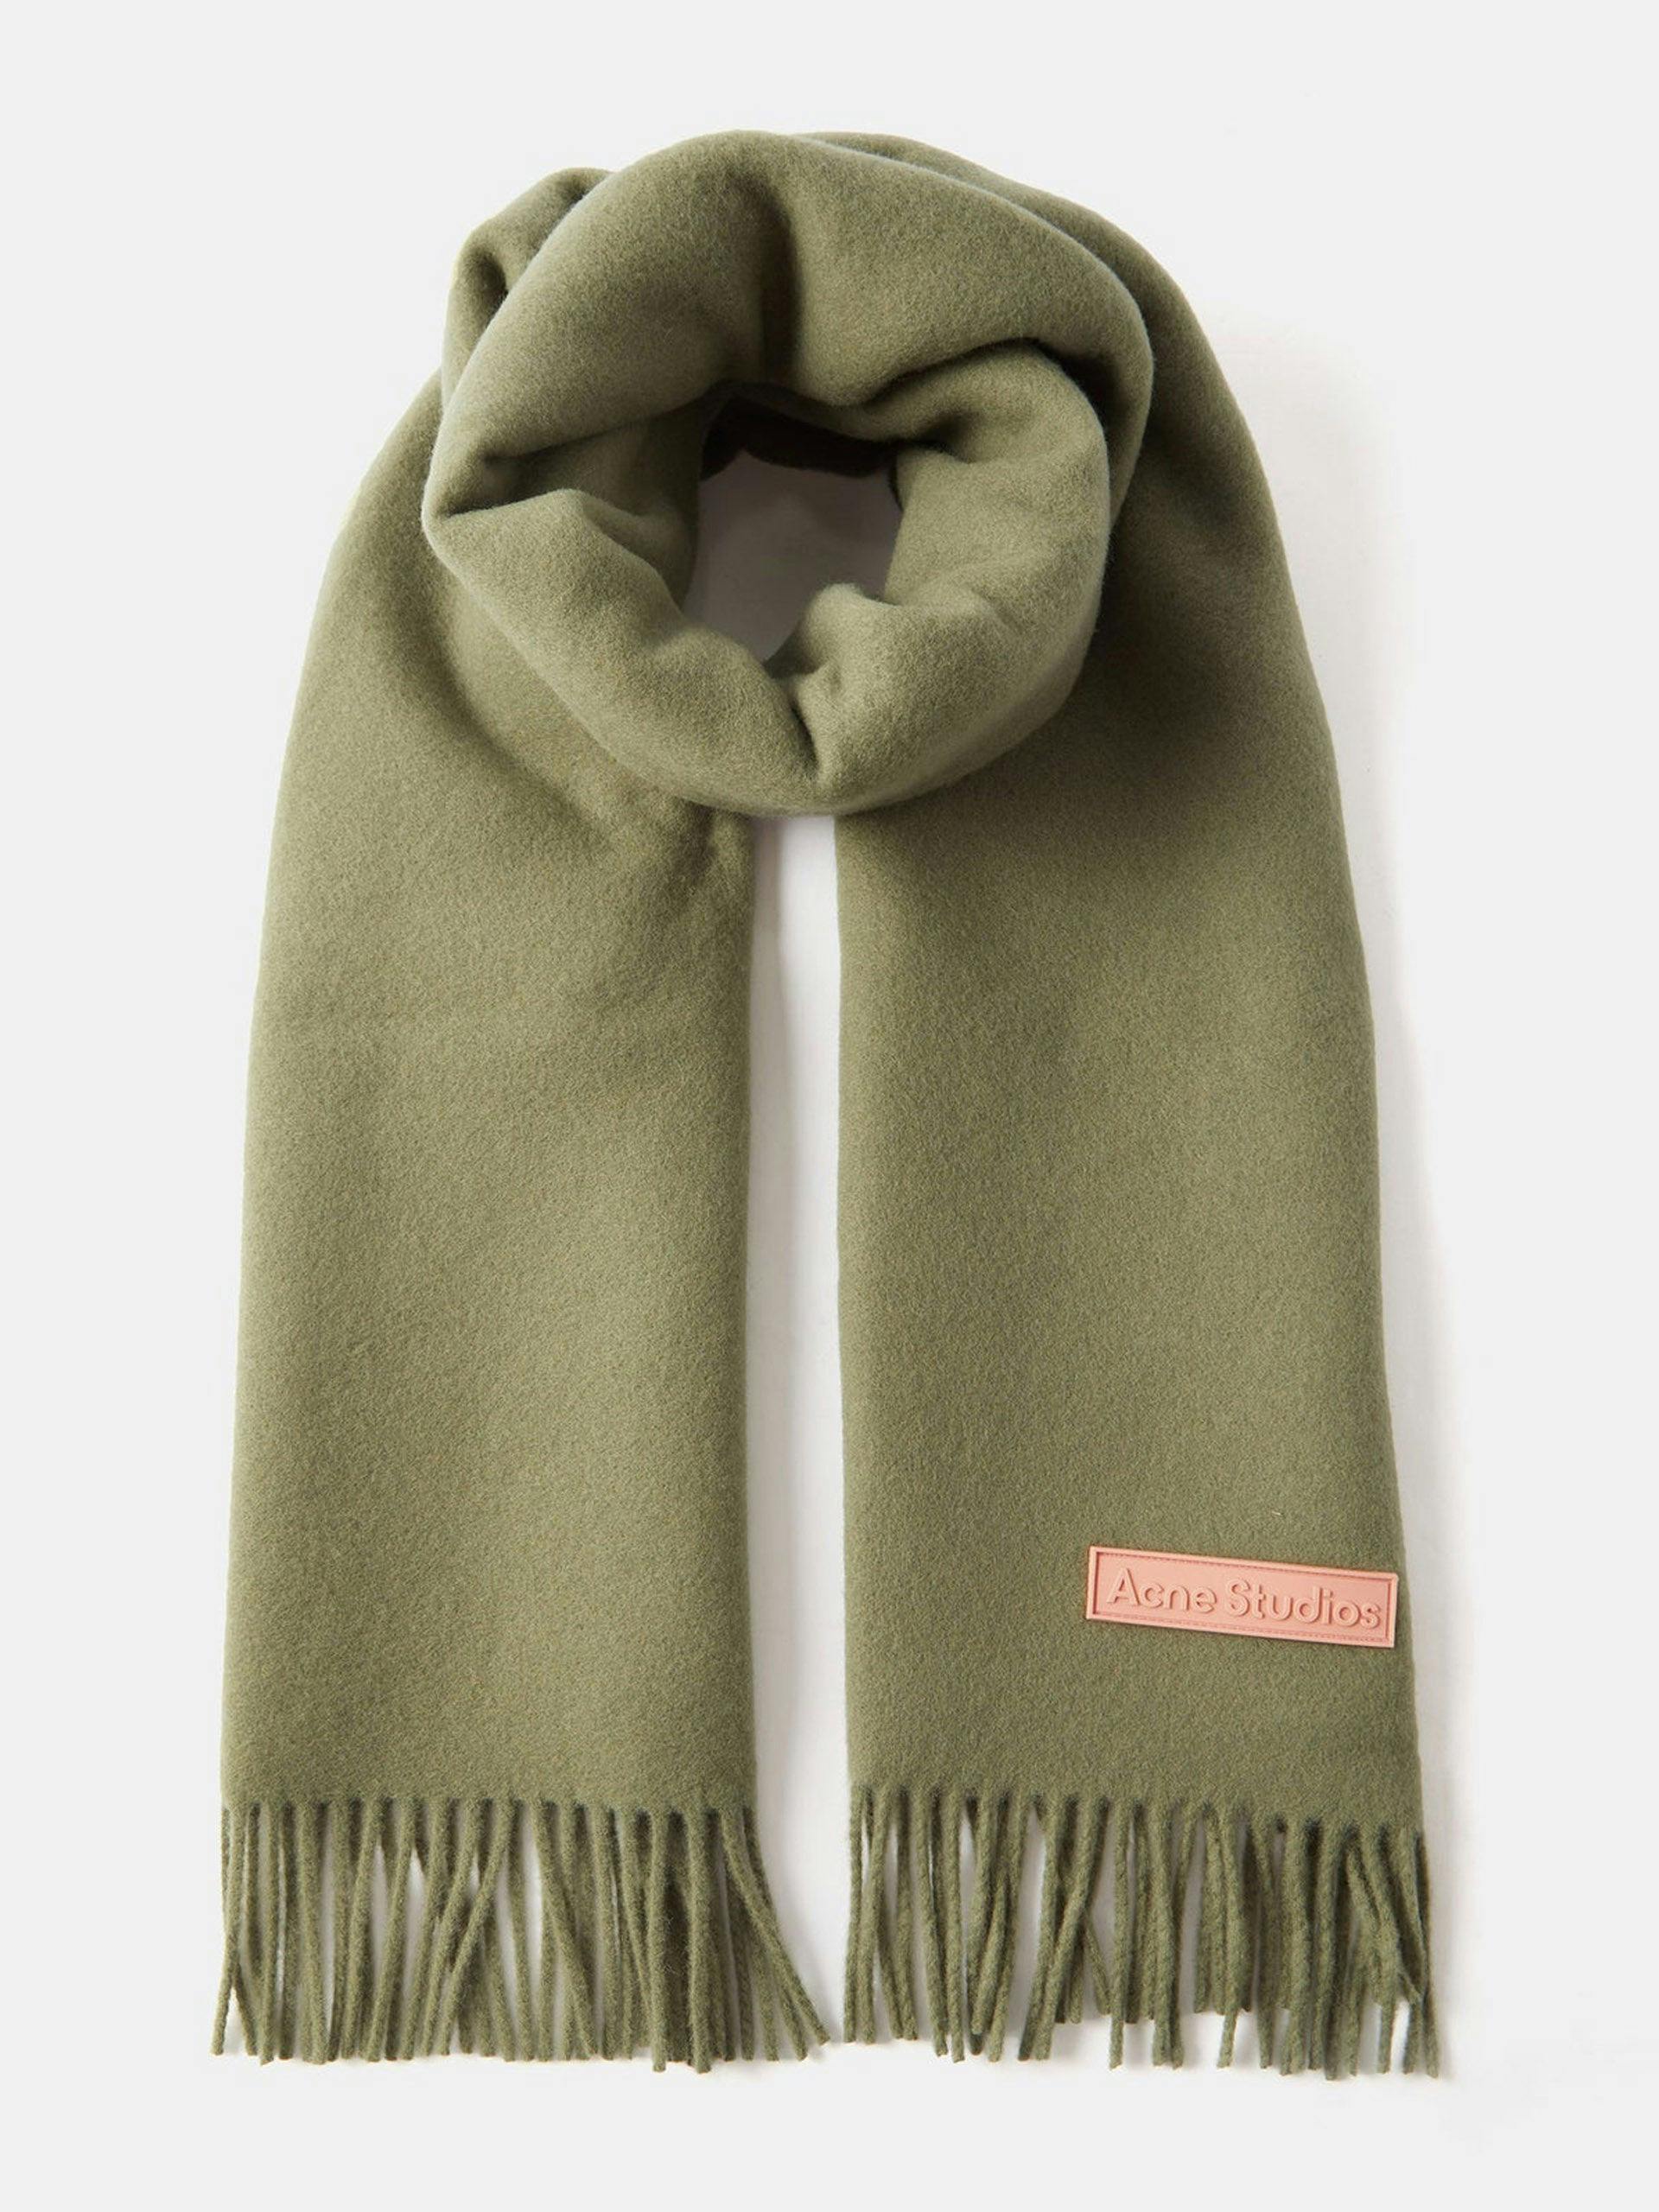 Vesta tasselled wool scarf